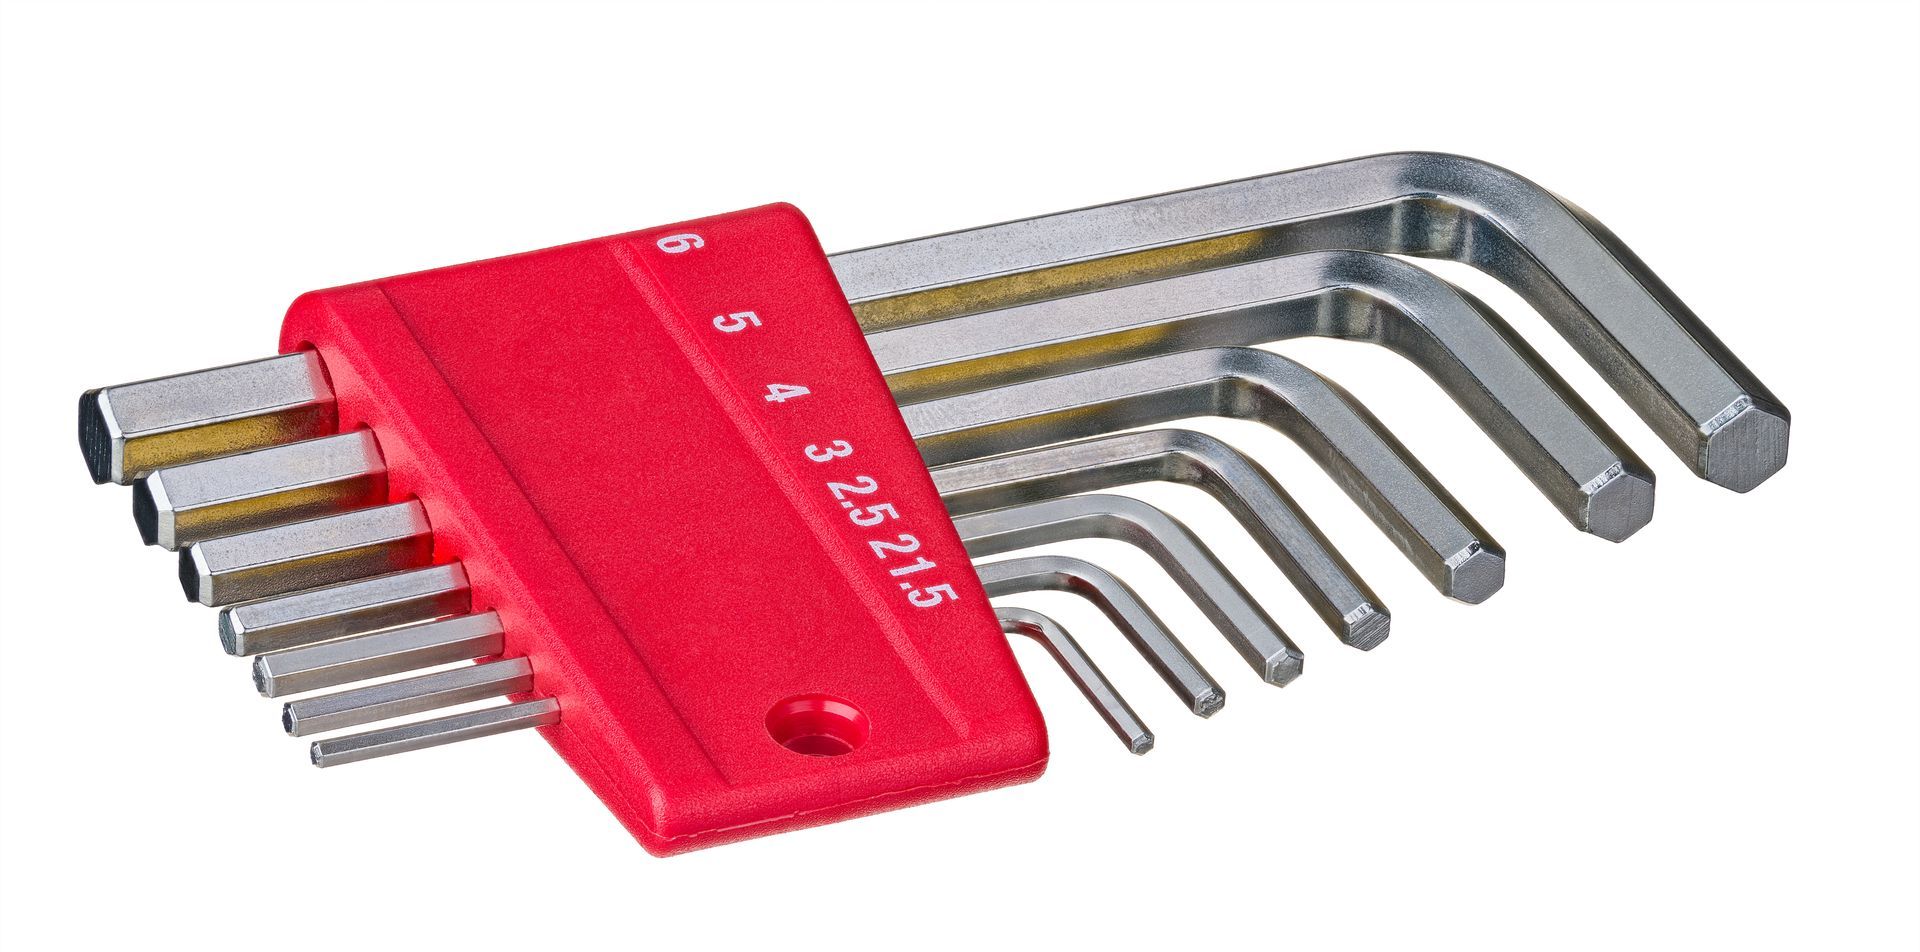 Allen wrench key set